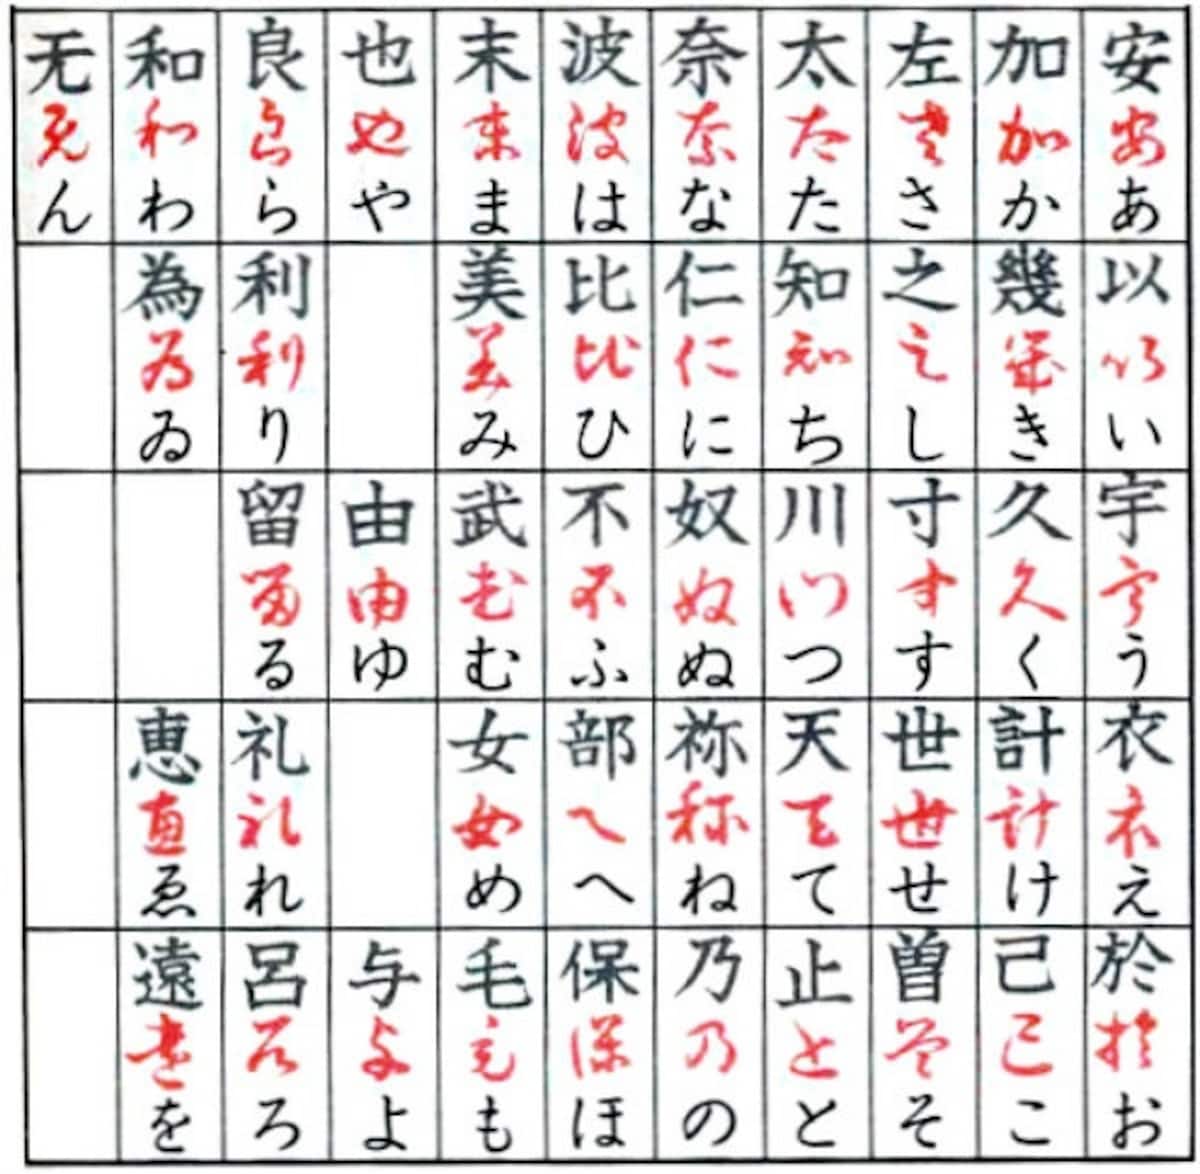 Intro to the Japanese Writing System: Katakana